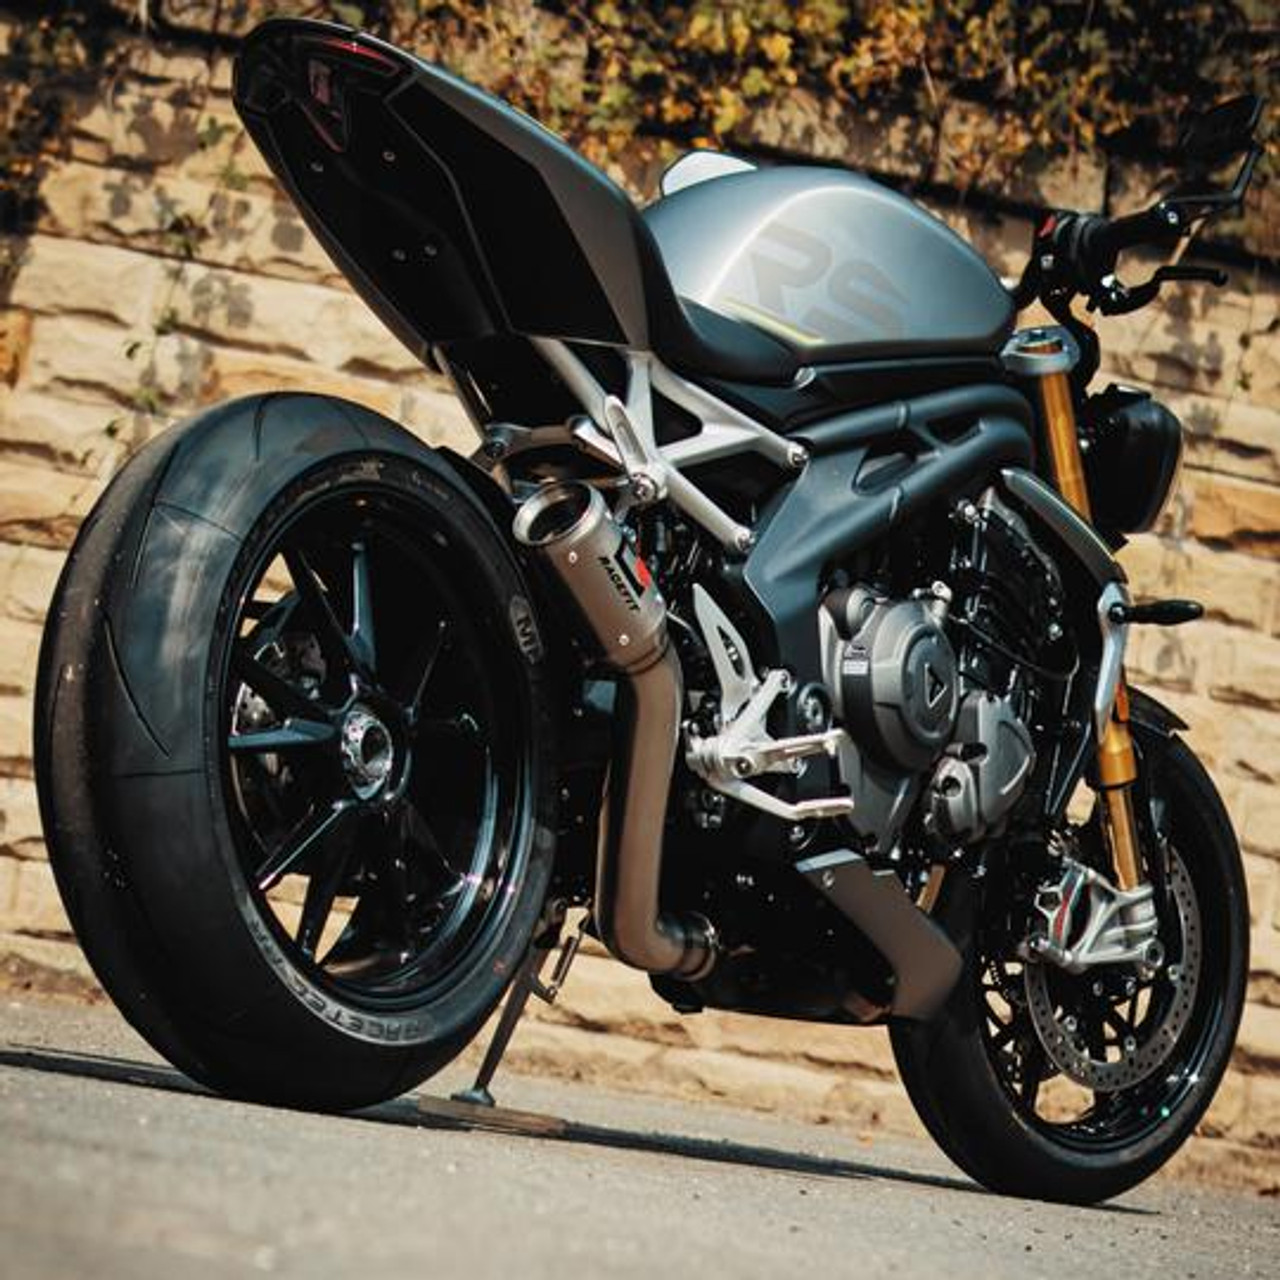 BMC Air Filter Honda CB500X 13-18 - Sportbike Track Gear